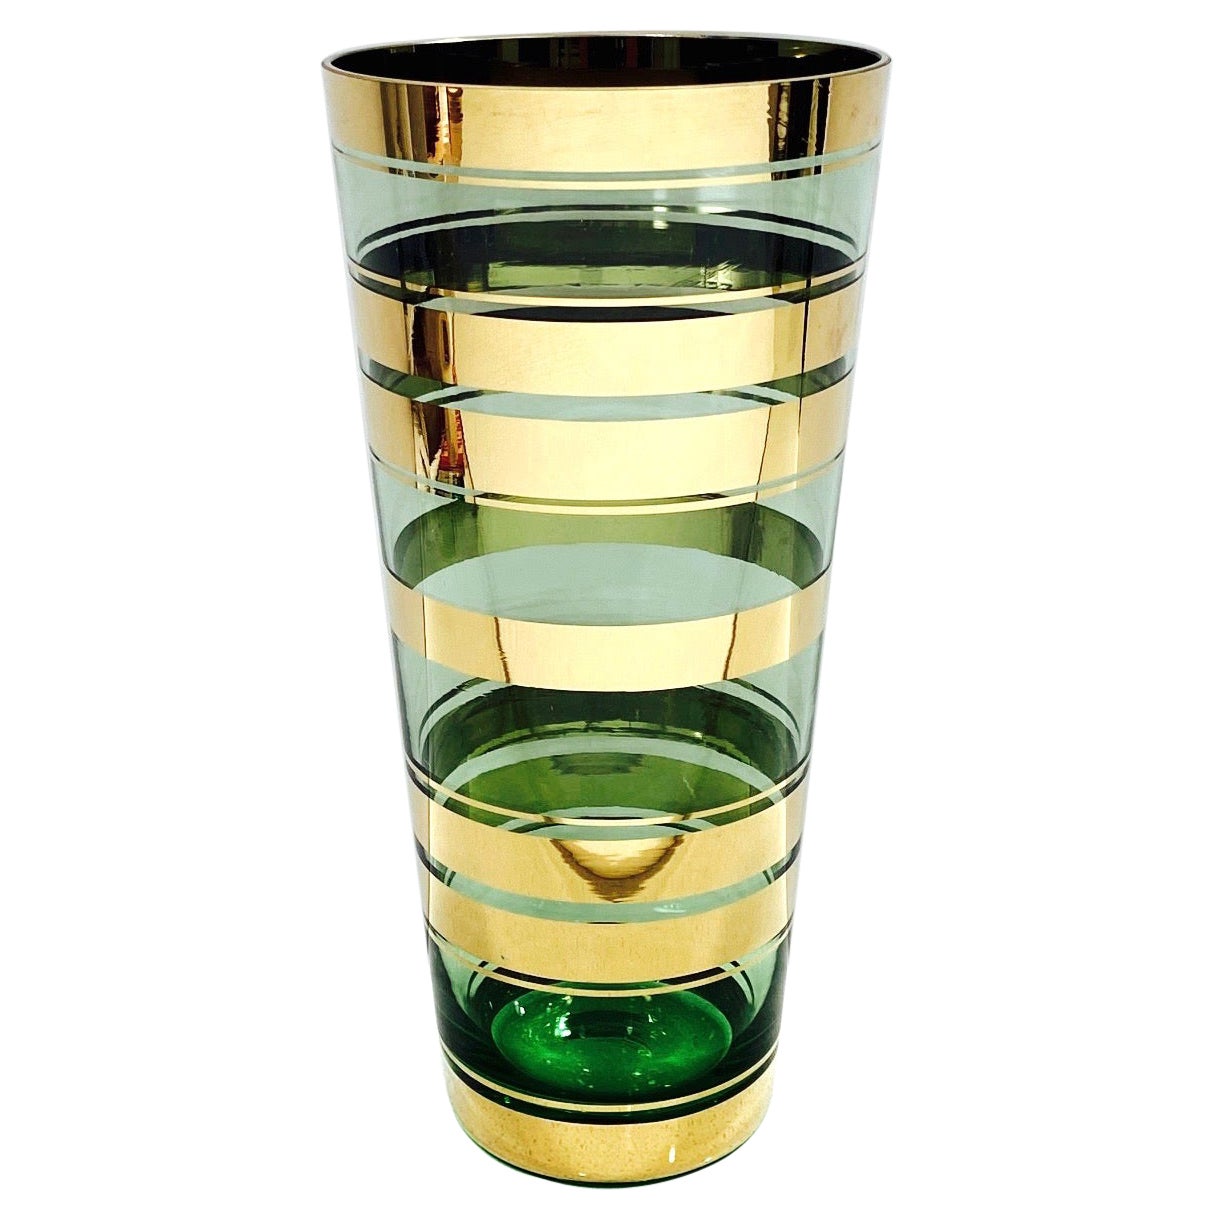 Vintage Green Glass Vase with 24-Karat Gold Overlays, Czech Republic, c. 1950's